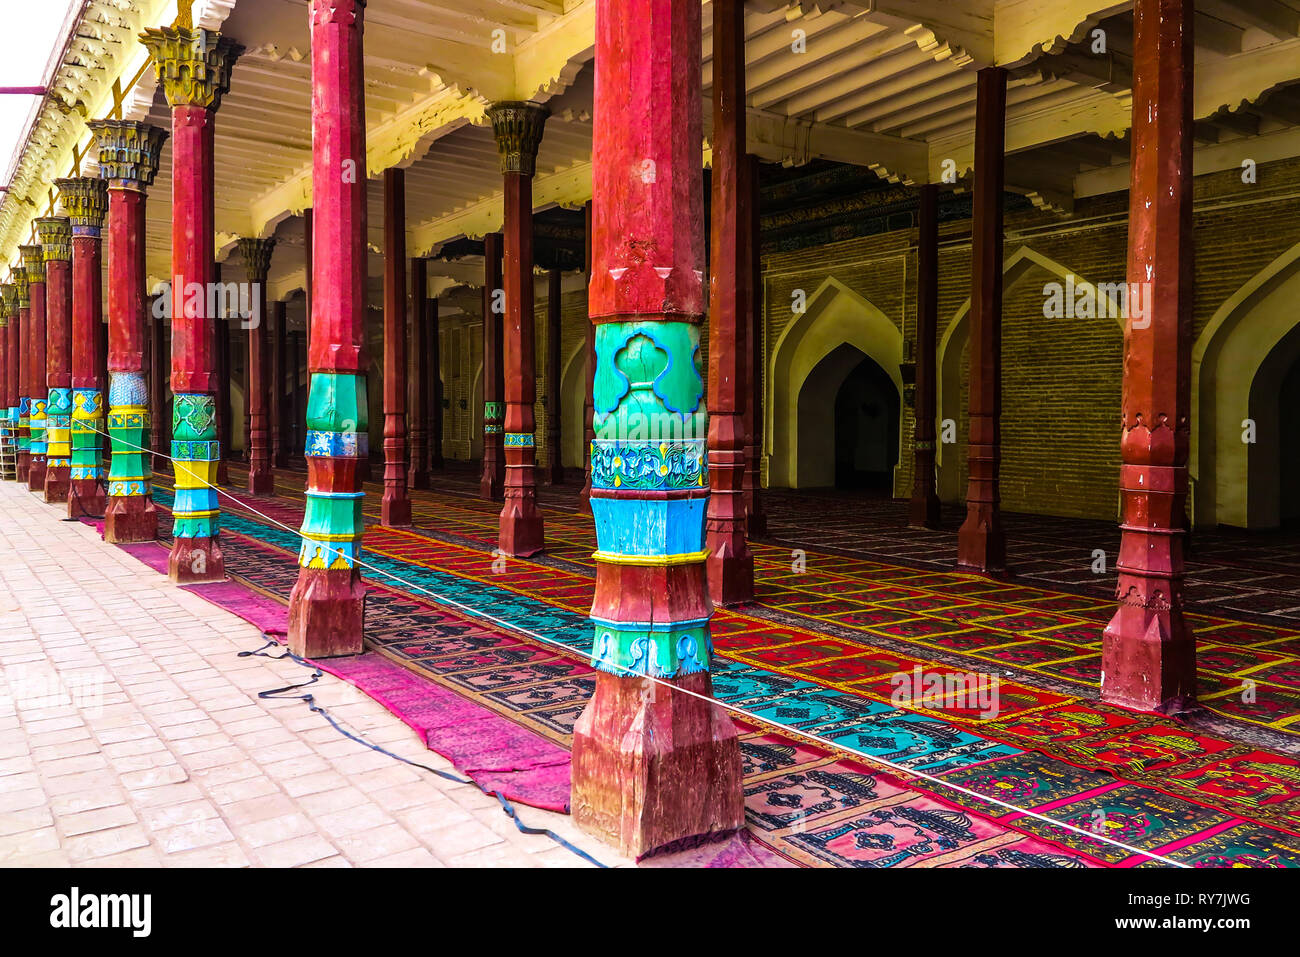 Kashgar Afaq Khoja Mausoleum Red Colored Column Pillars with Carpets on Floor Stock Photo